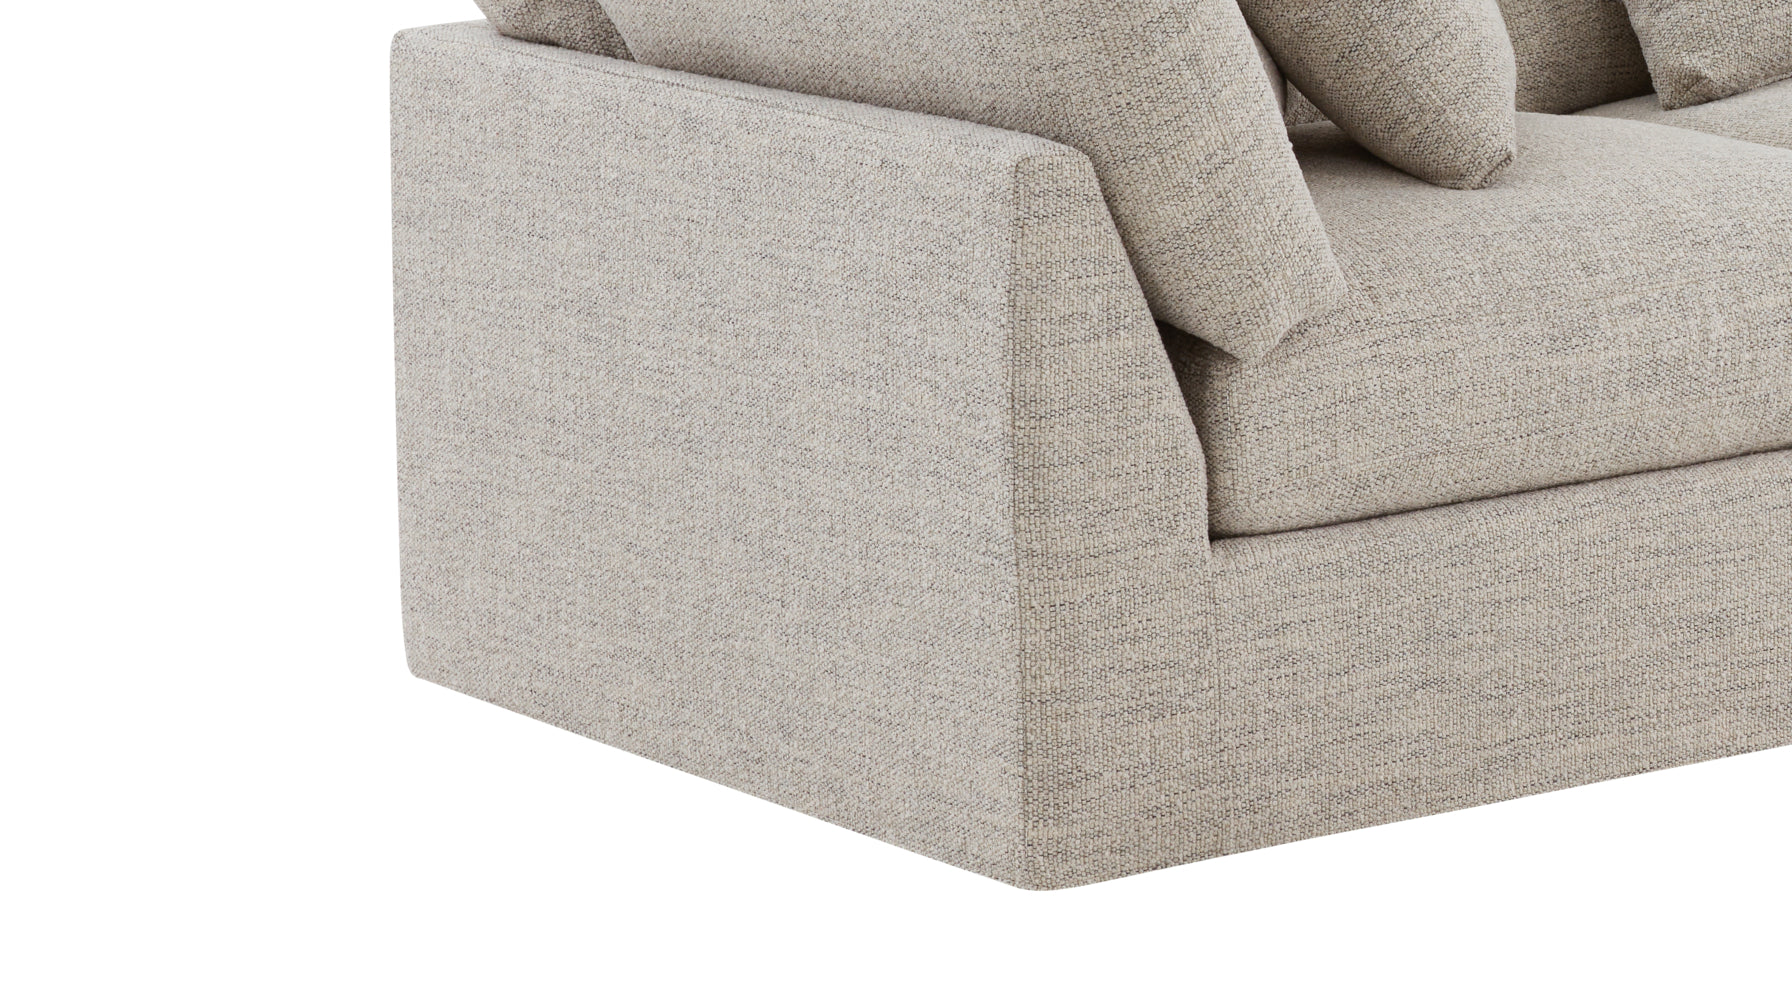 Get Together™ 3-Piece Modular Sofa, Large, Oatmeal - Image 10